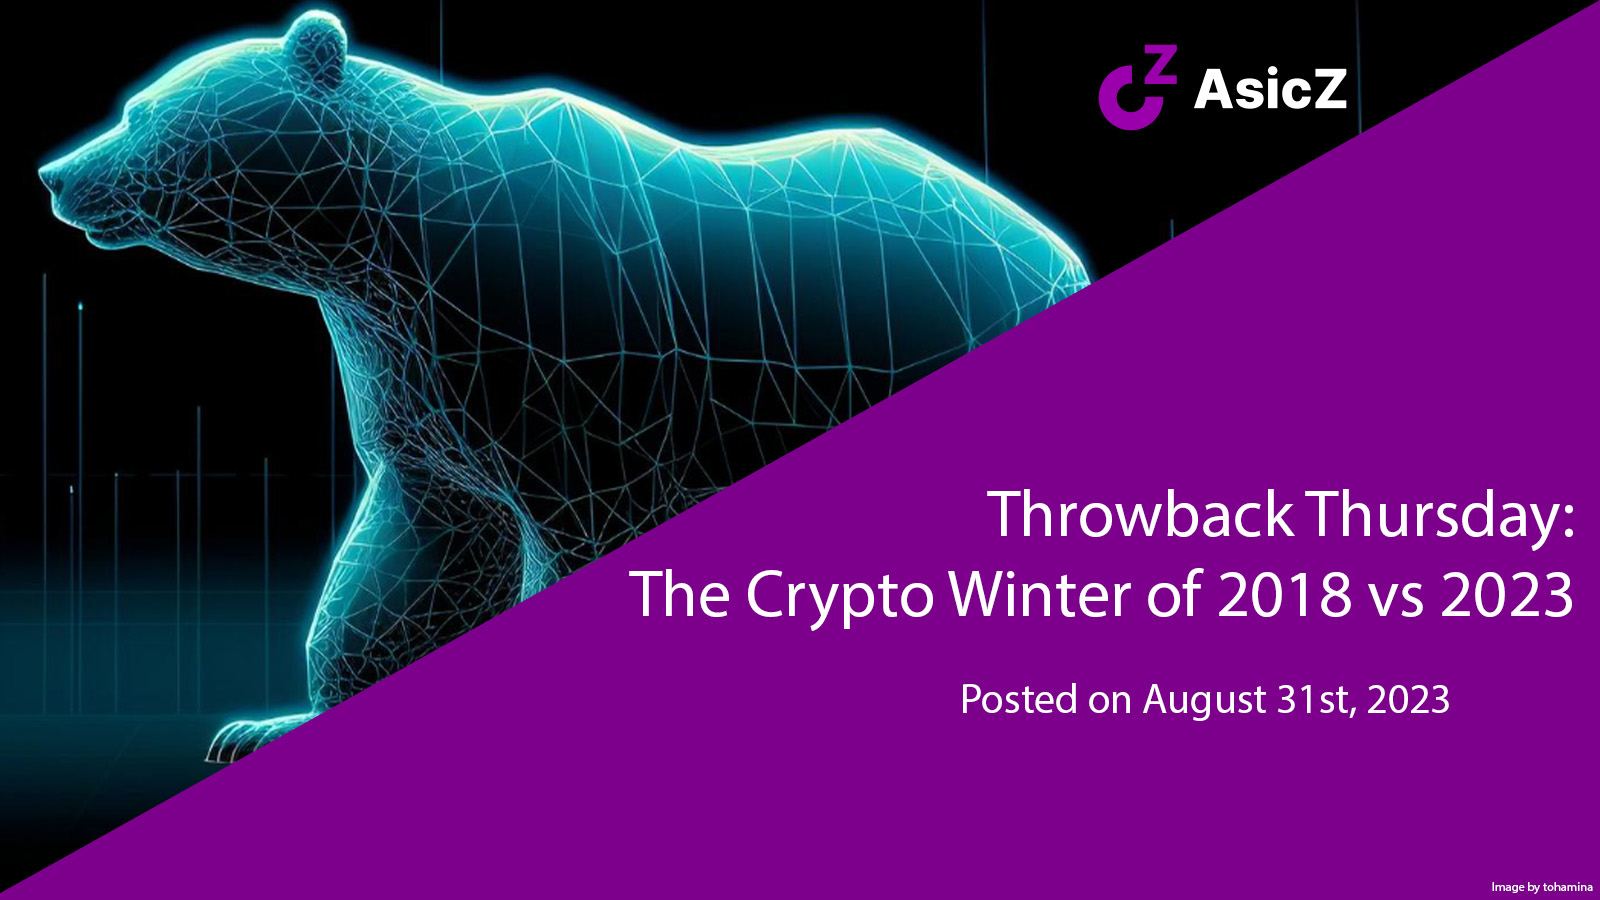 Throwback Thursday: The Crypto Winter of 2018 vs. 2023